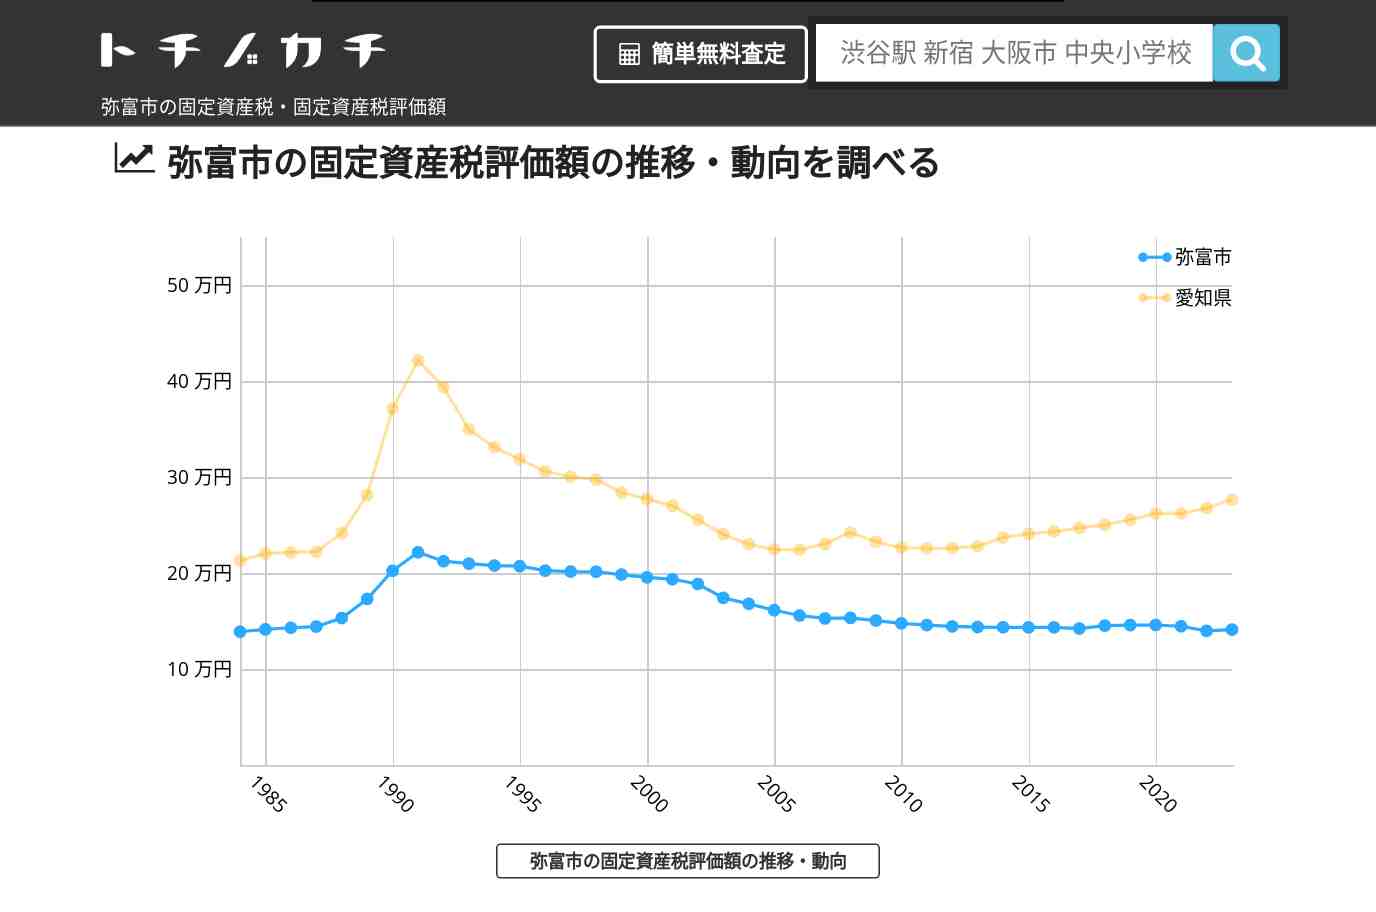 桜小学校(愛知県 弥富市)周辺の固定資産税・固定資産税評価額 | トチノカチ